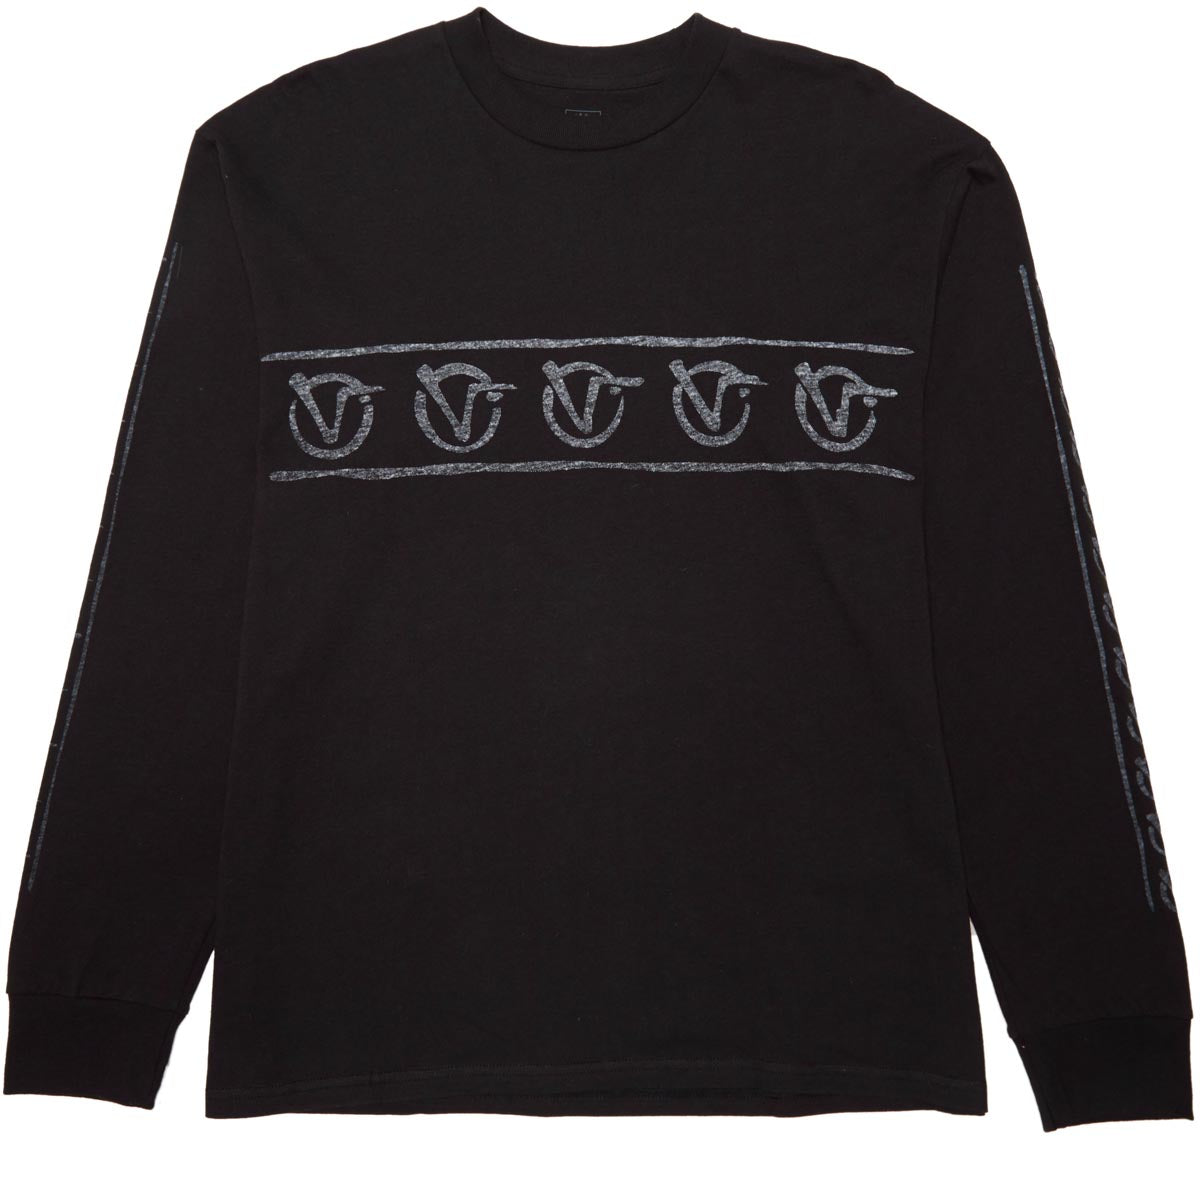 Vans Rowan Zorilla Long Sleeve T-Shirt - Black image 1